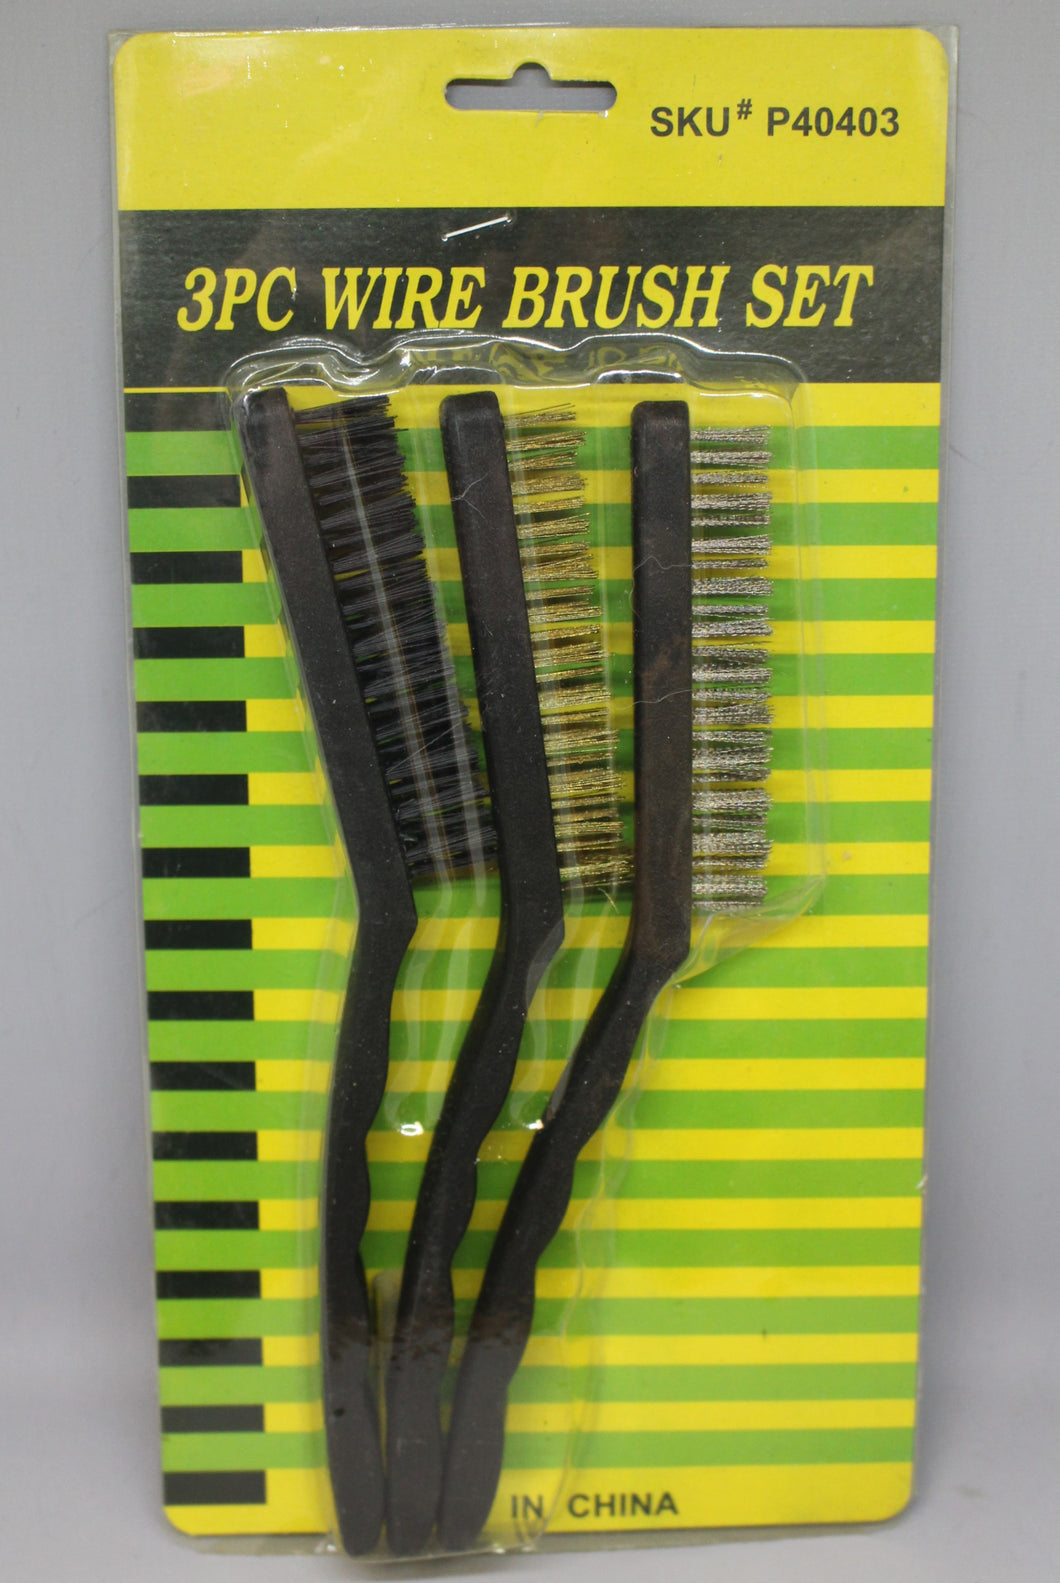 3 Piece Wire Brush Set - P40403 - New